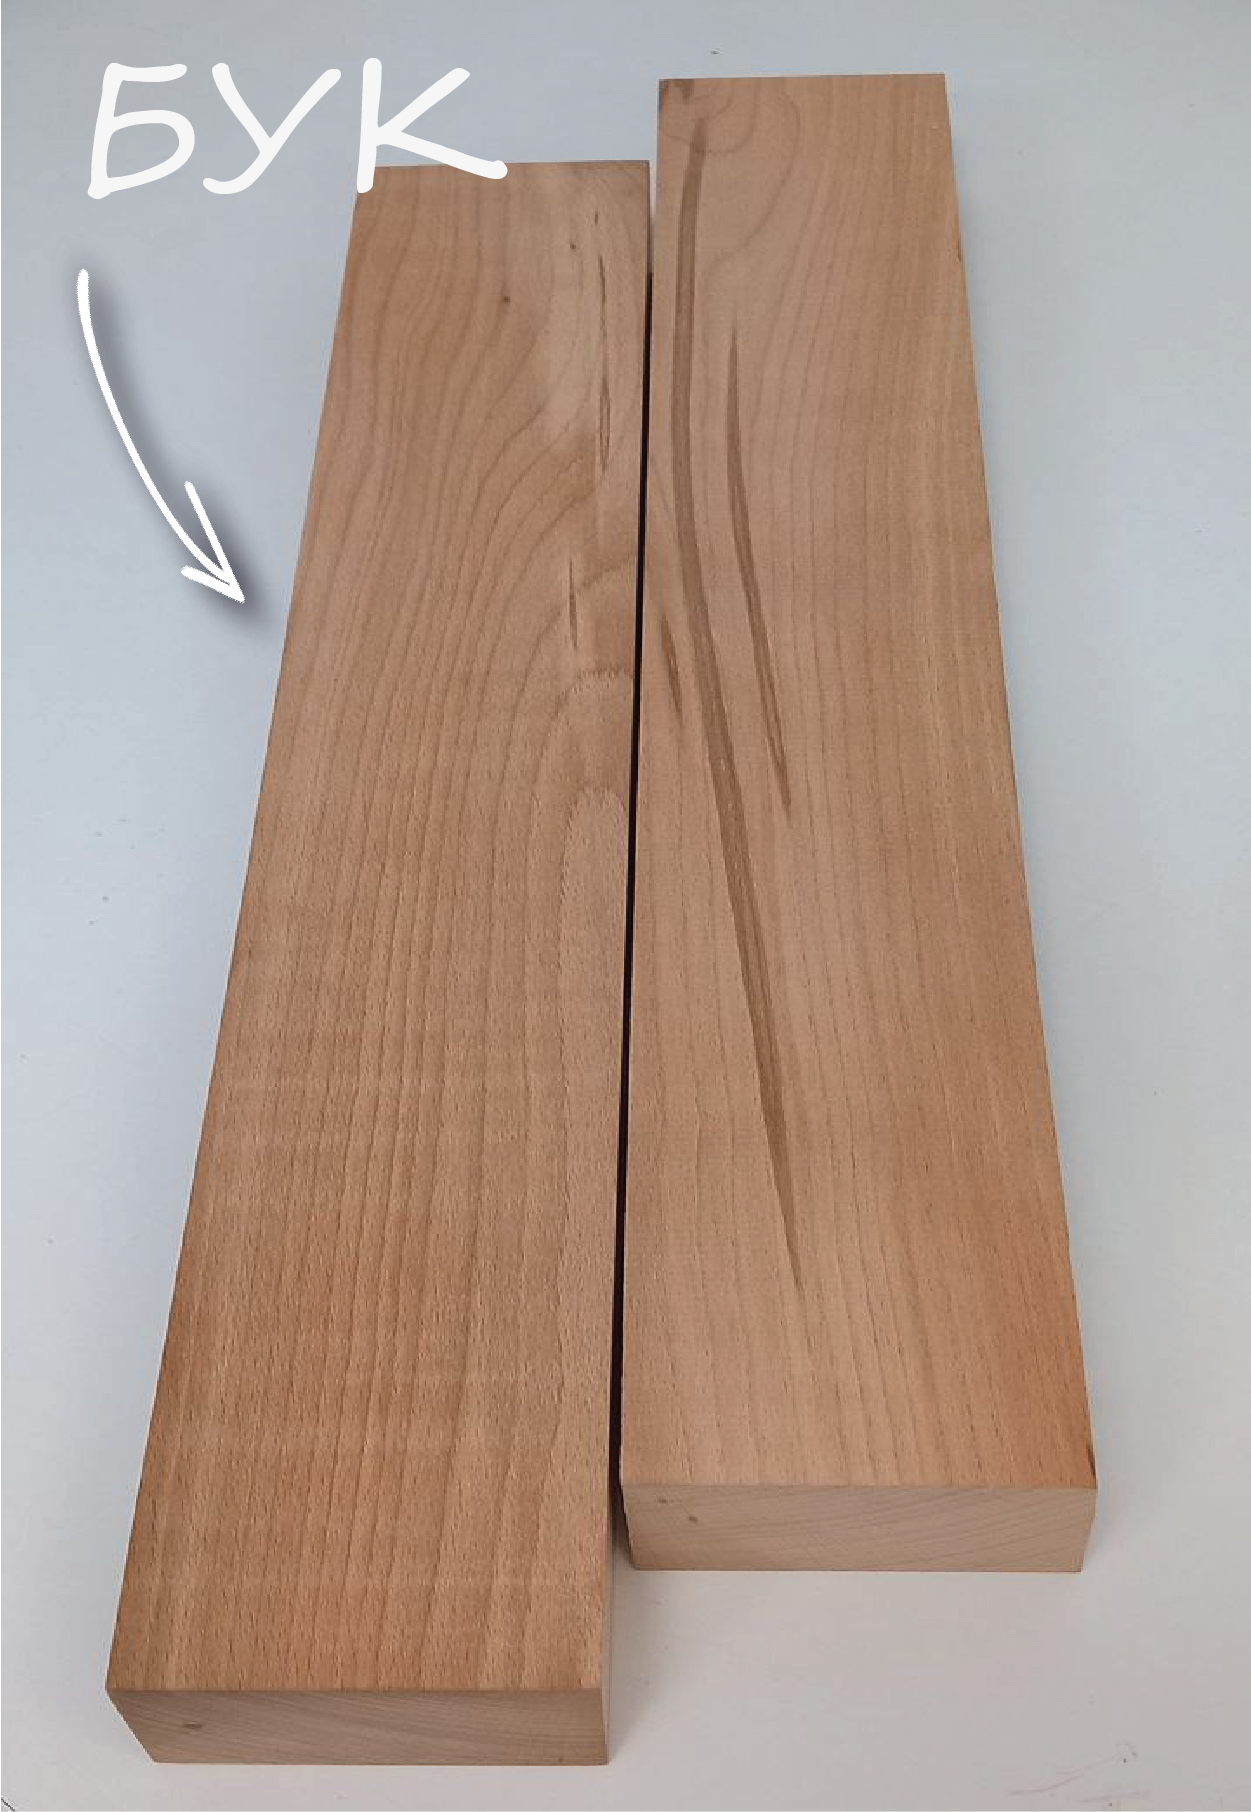 Брусок для резьбы БУК 550х85х45 мм брусок деревянный для творчества и хобби